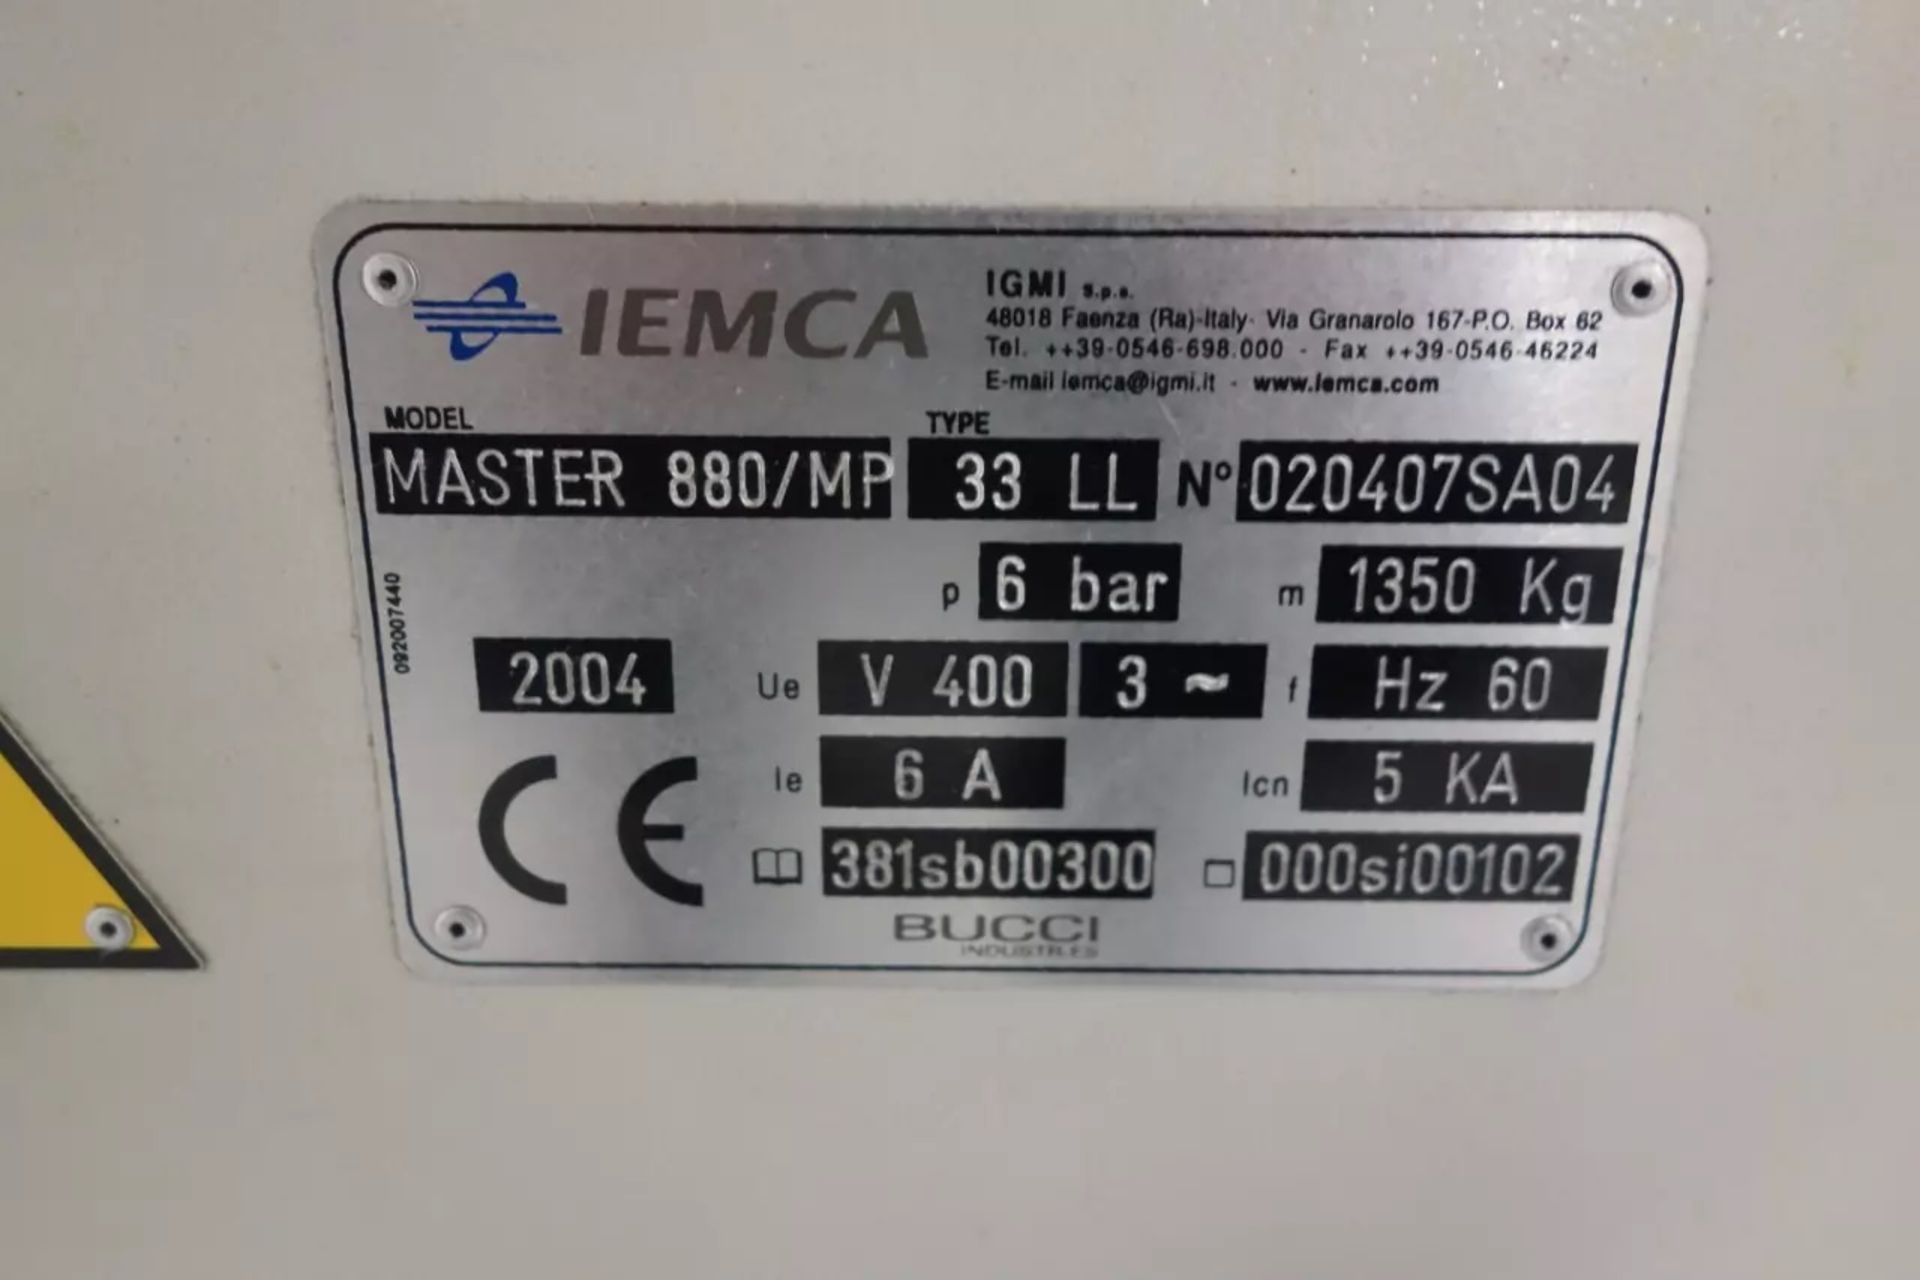 3" Cap Iemca Master 880/MP-E Magazine Type Bar feeder, S?N 020407SA04, New 2004 - Image 6 of 6